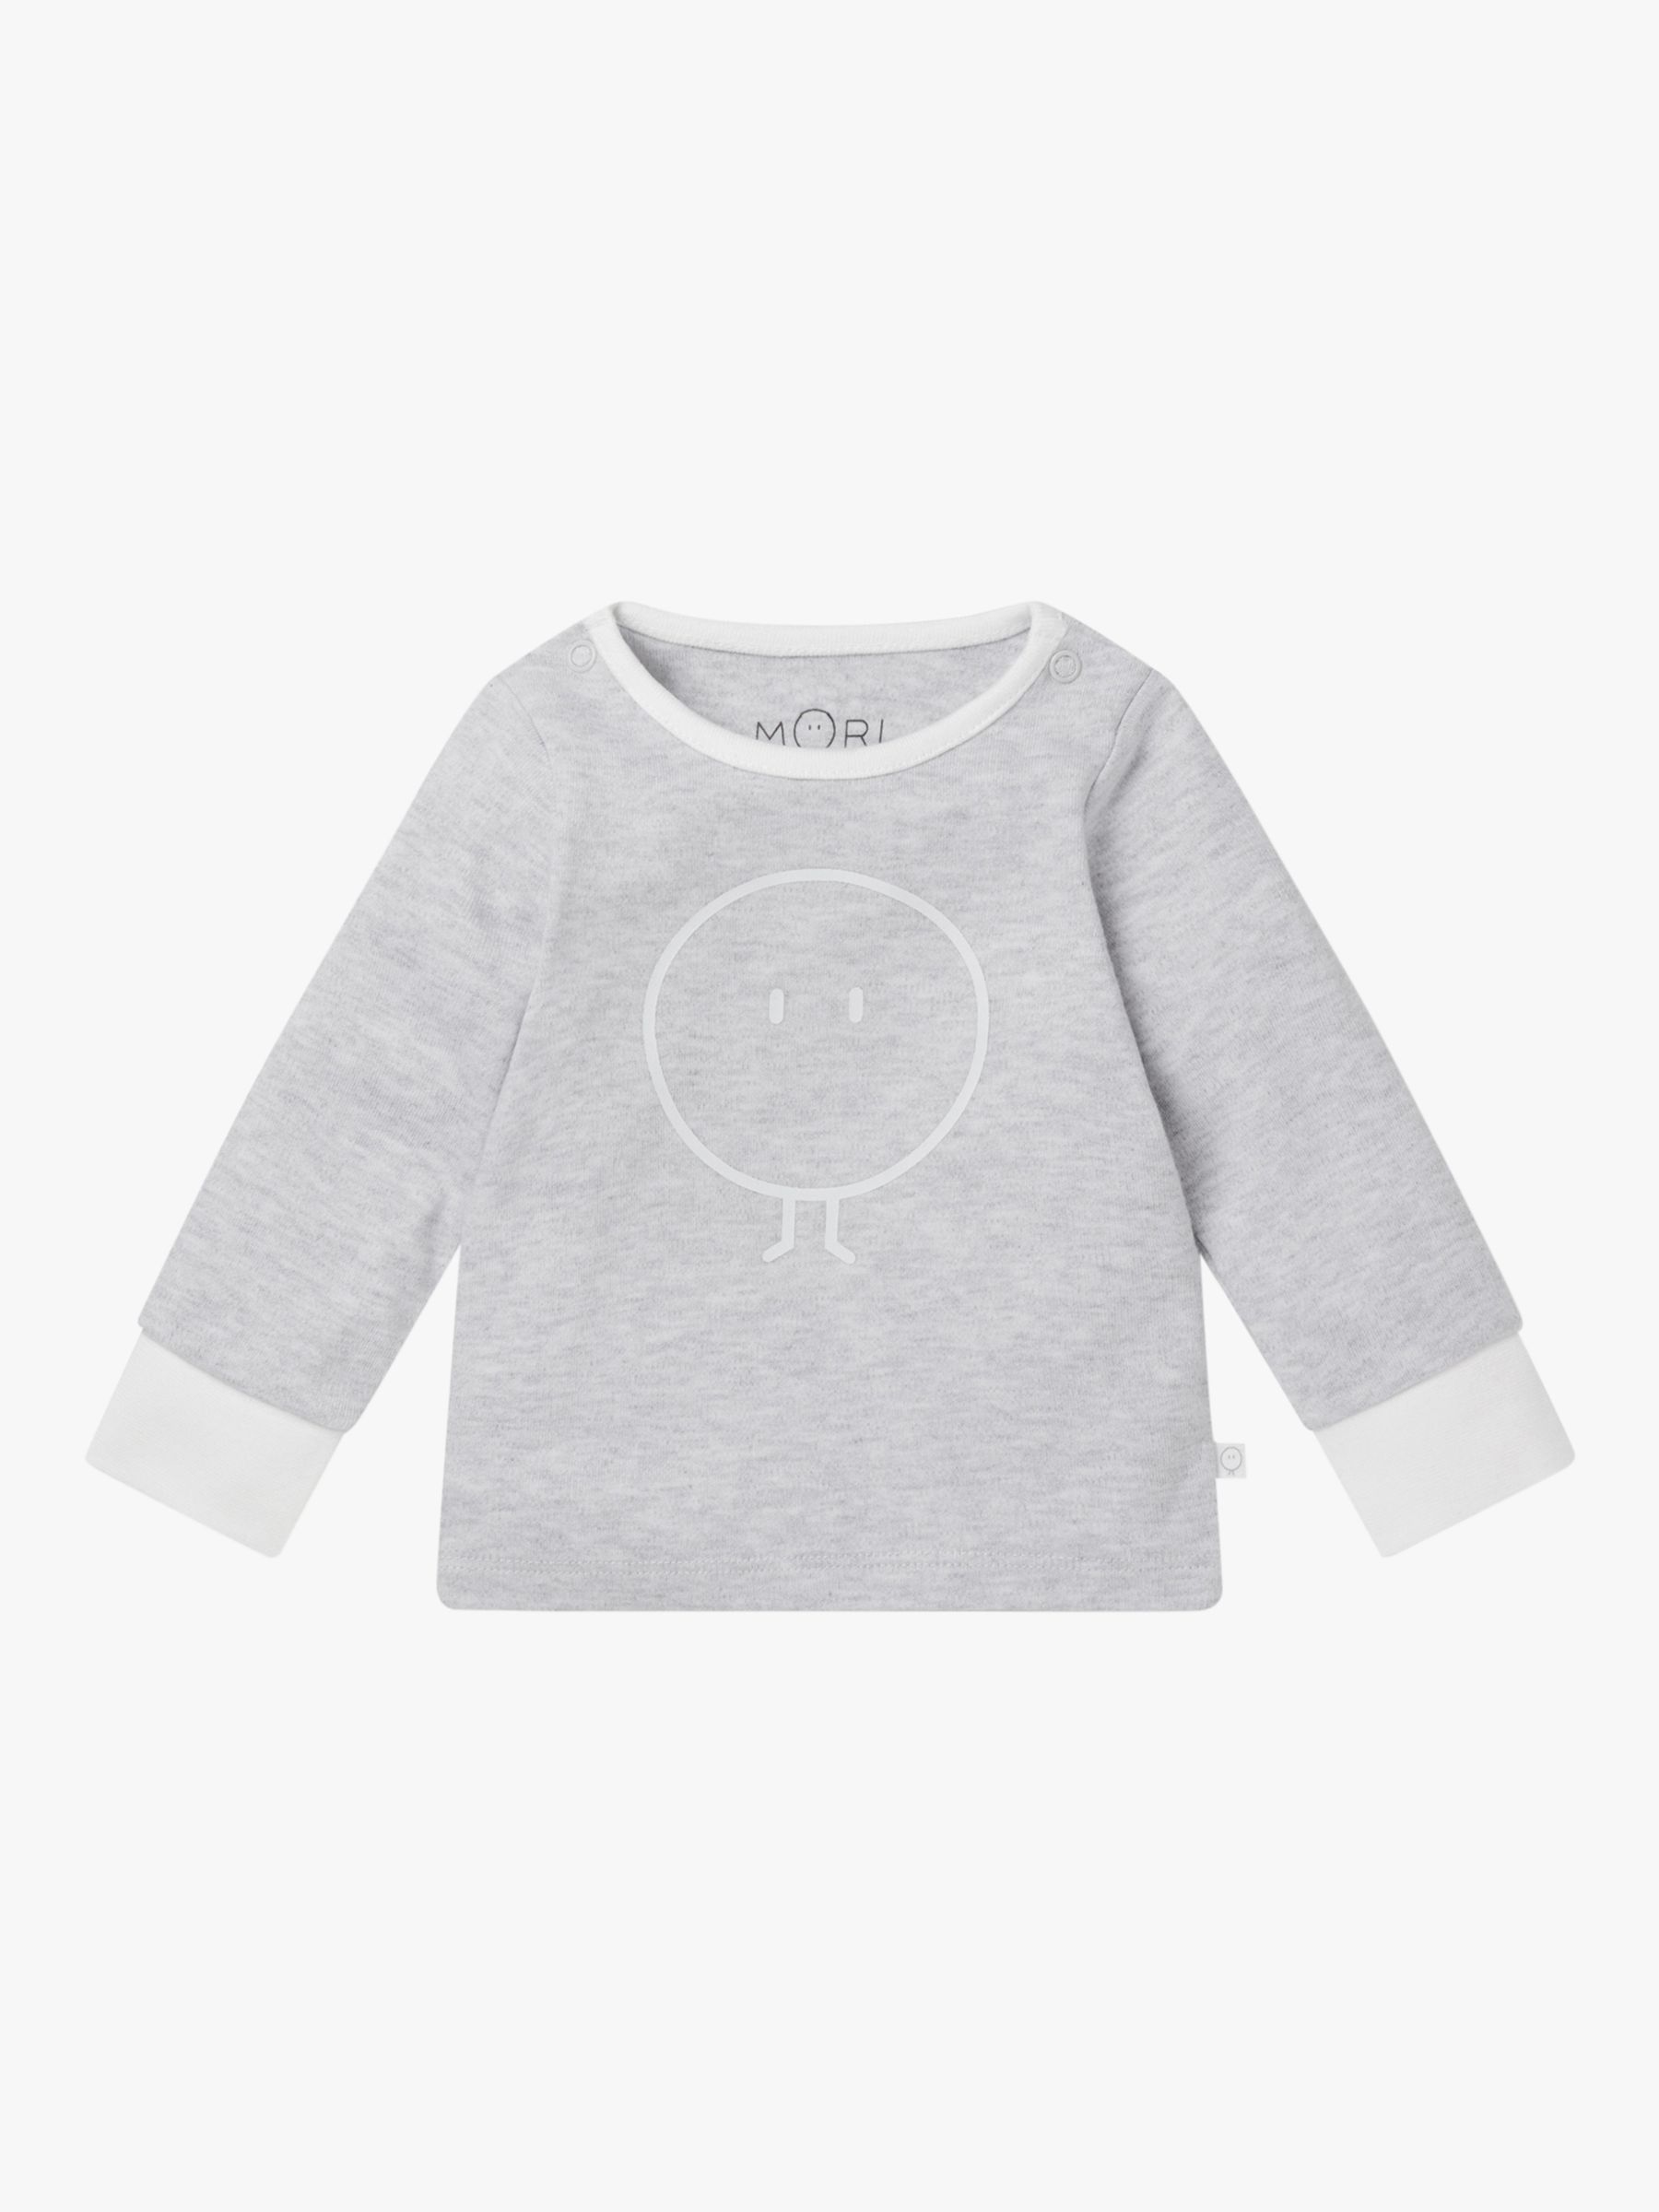 Buy MORI Baby Snoozy Pyjamas, Grey Online at johnlewis.com